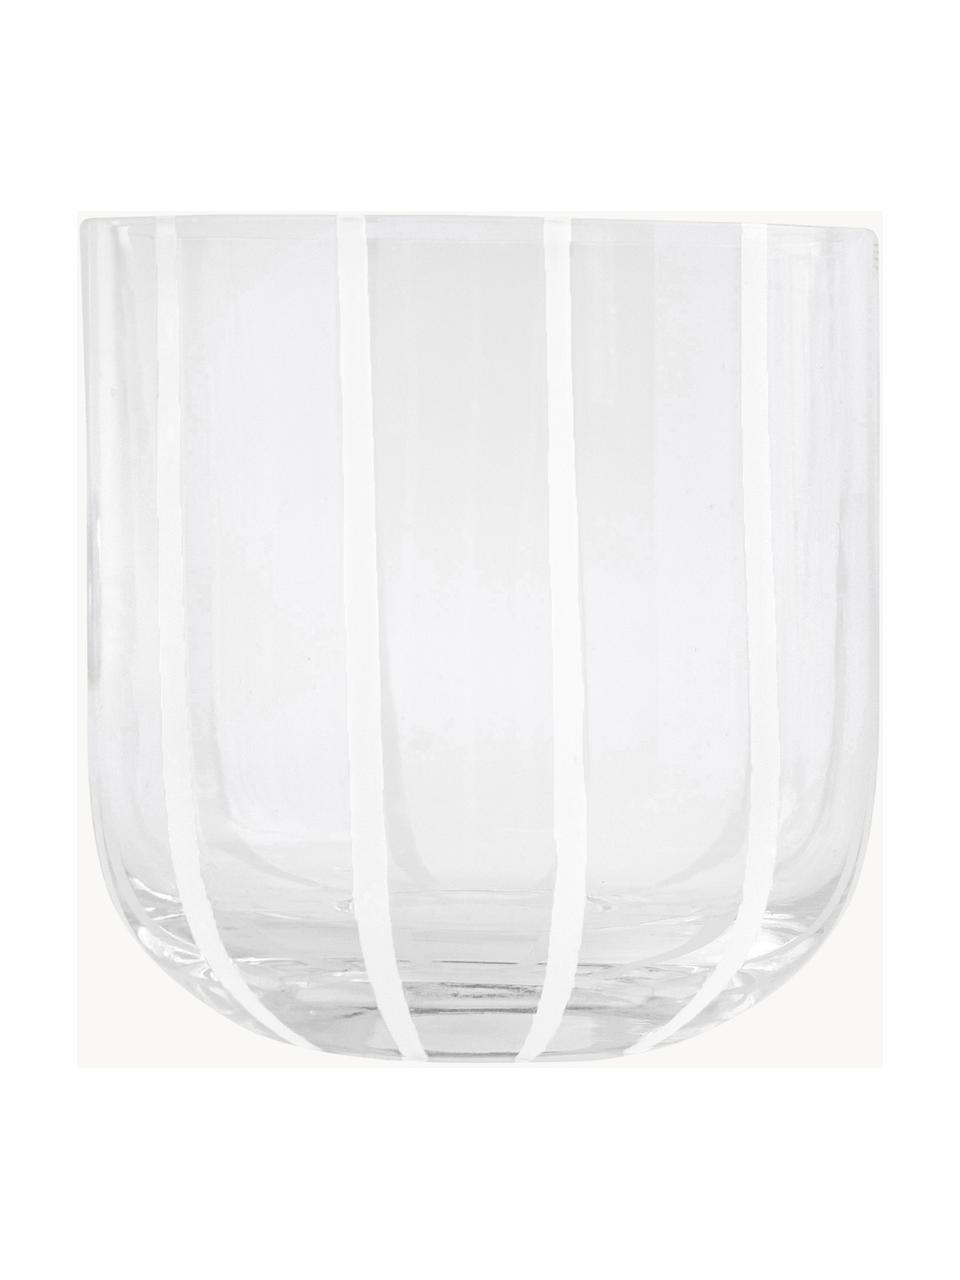 Bicchiere in vetro soffiato Mizu, 2 pz, Vetro, Trasparente, bianco, Ø 8 x Alt. 8 cm, 320 ml